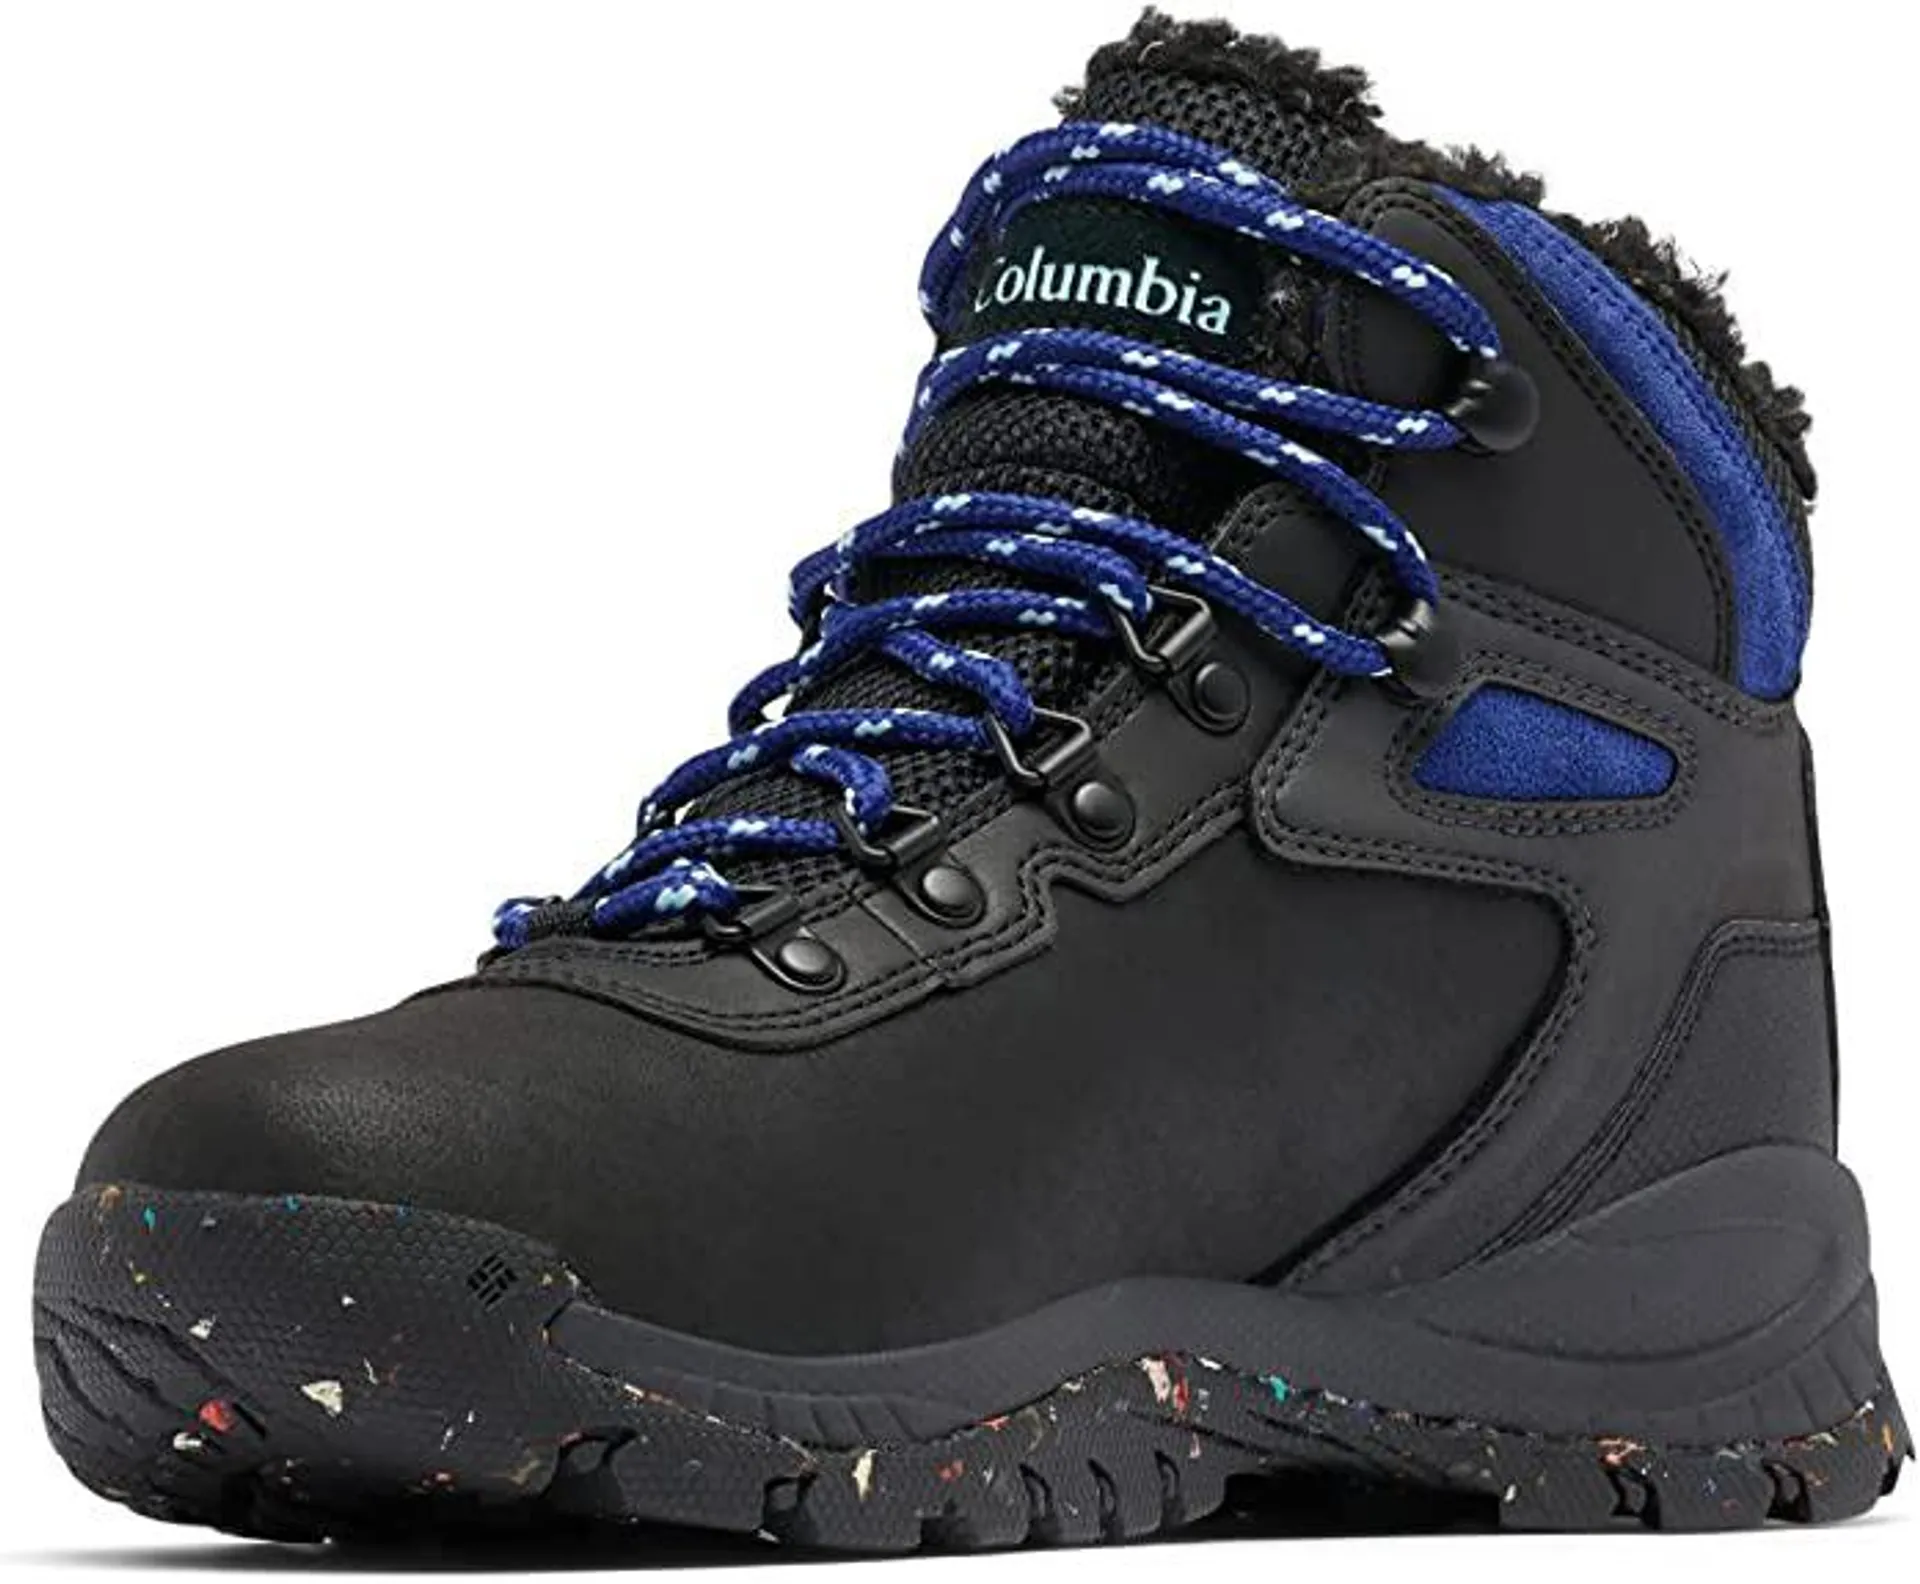 Columbia Women's Newton Ridge Plus Omni Heat Hiking Shoe